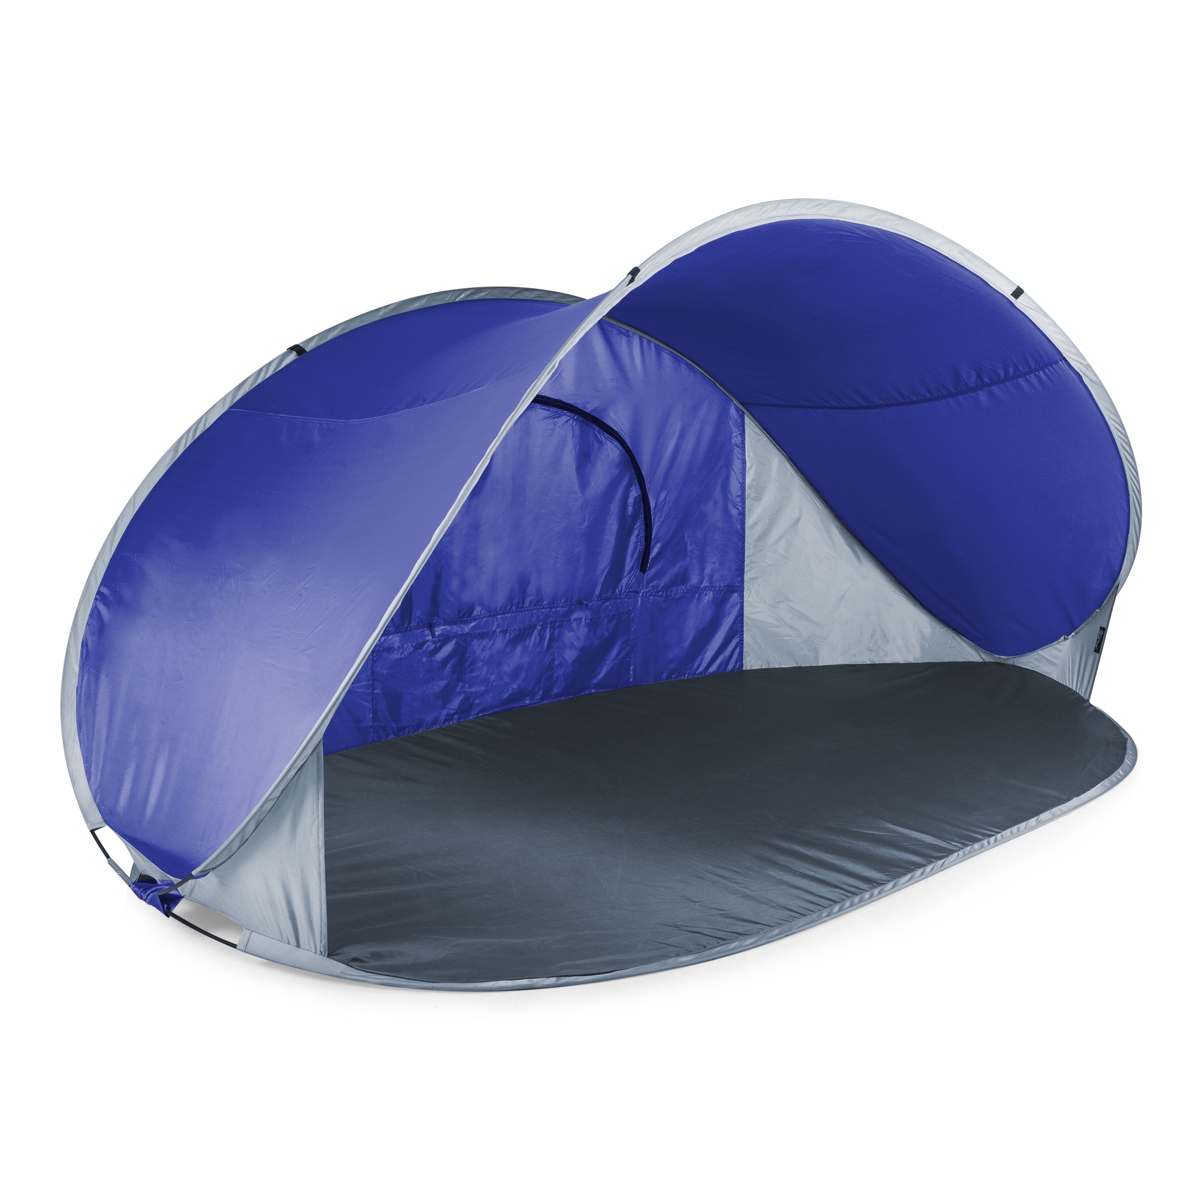 by Picnic Time Manta Portable Beach Tent - Blue/gray/